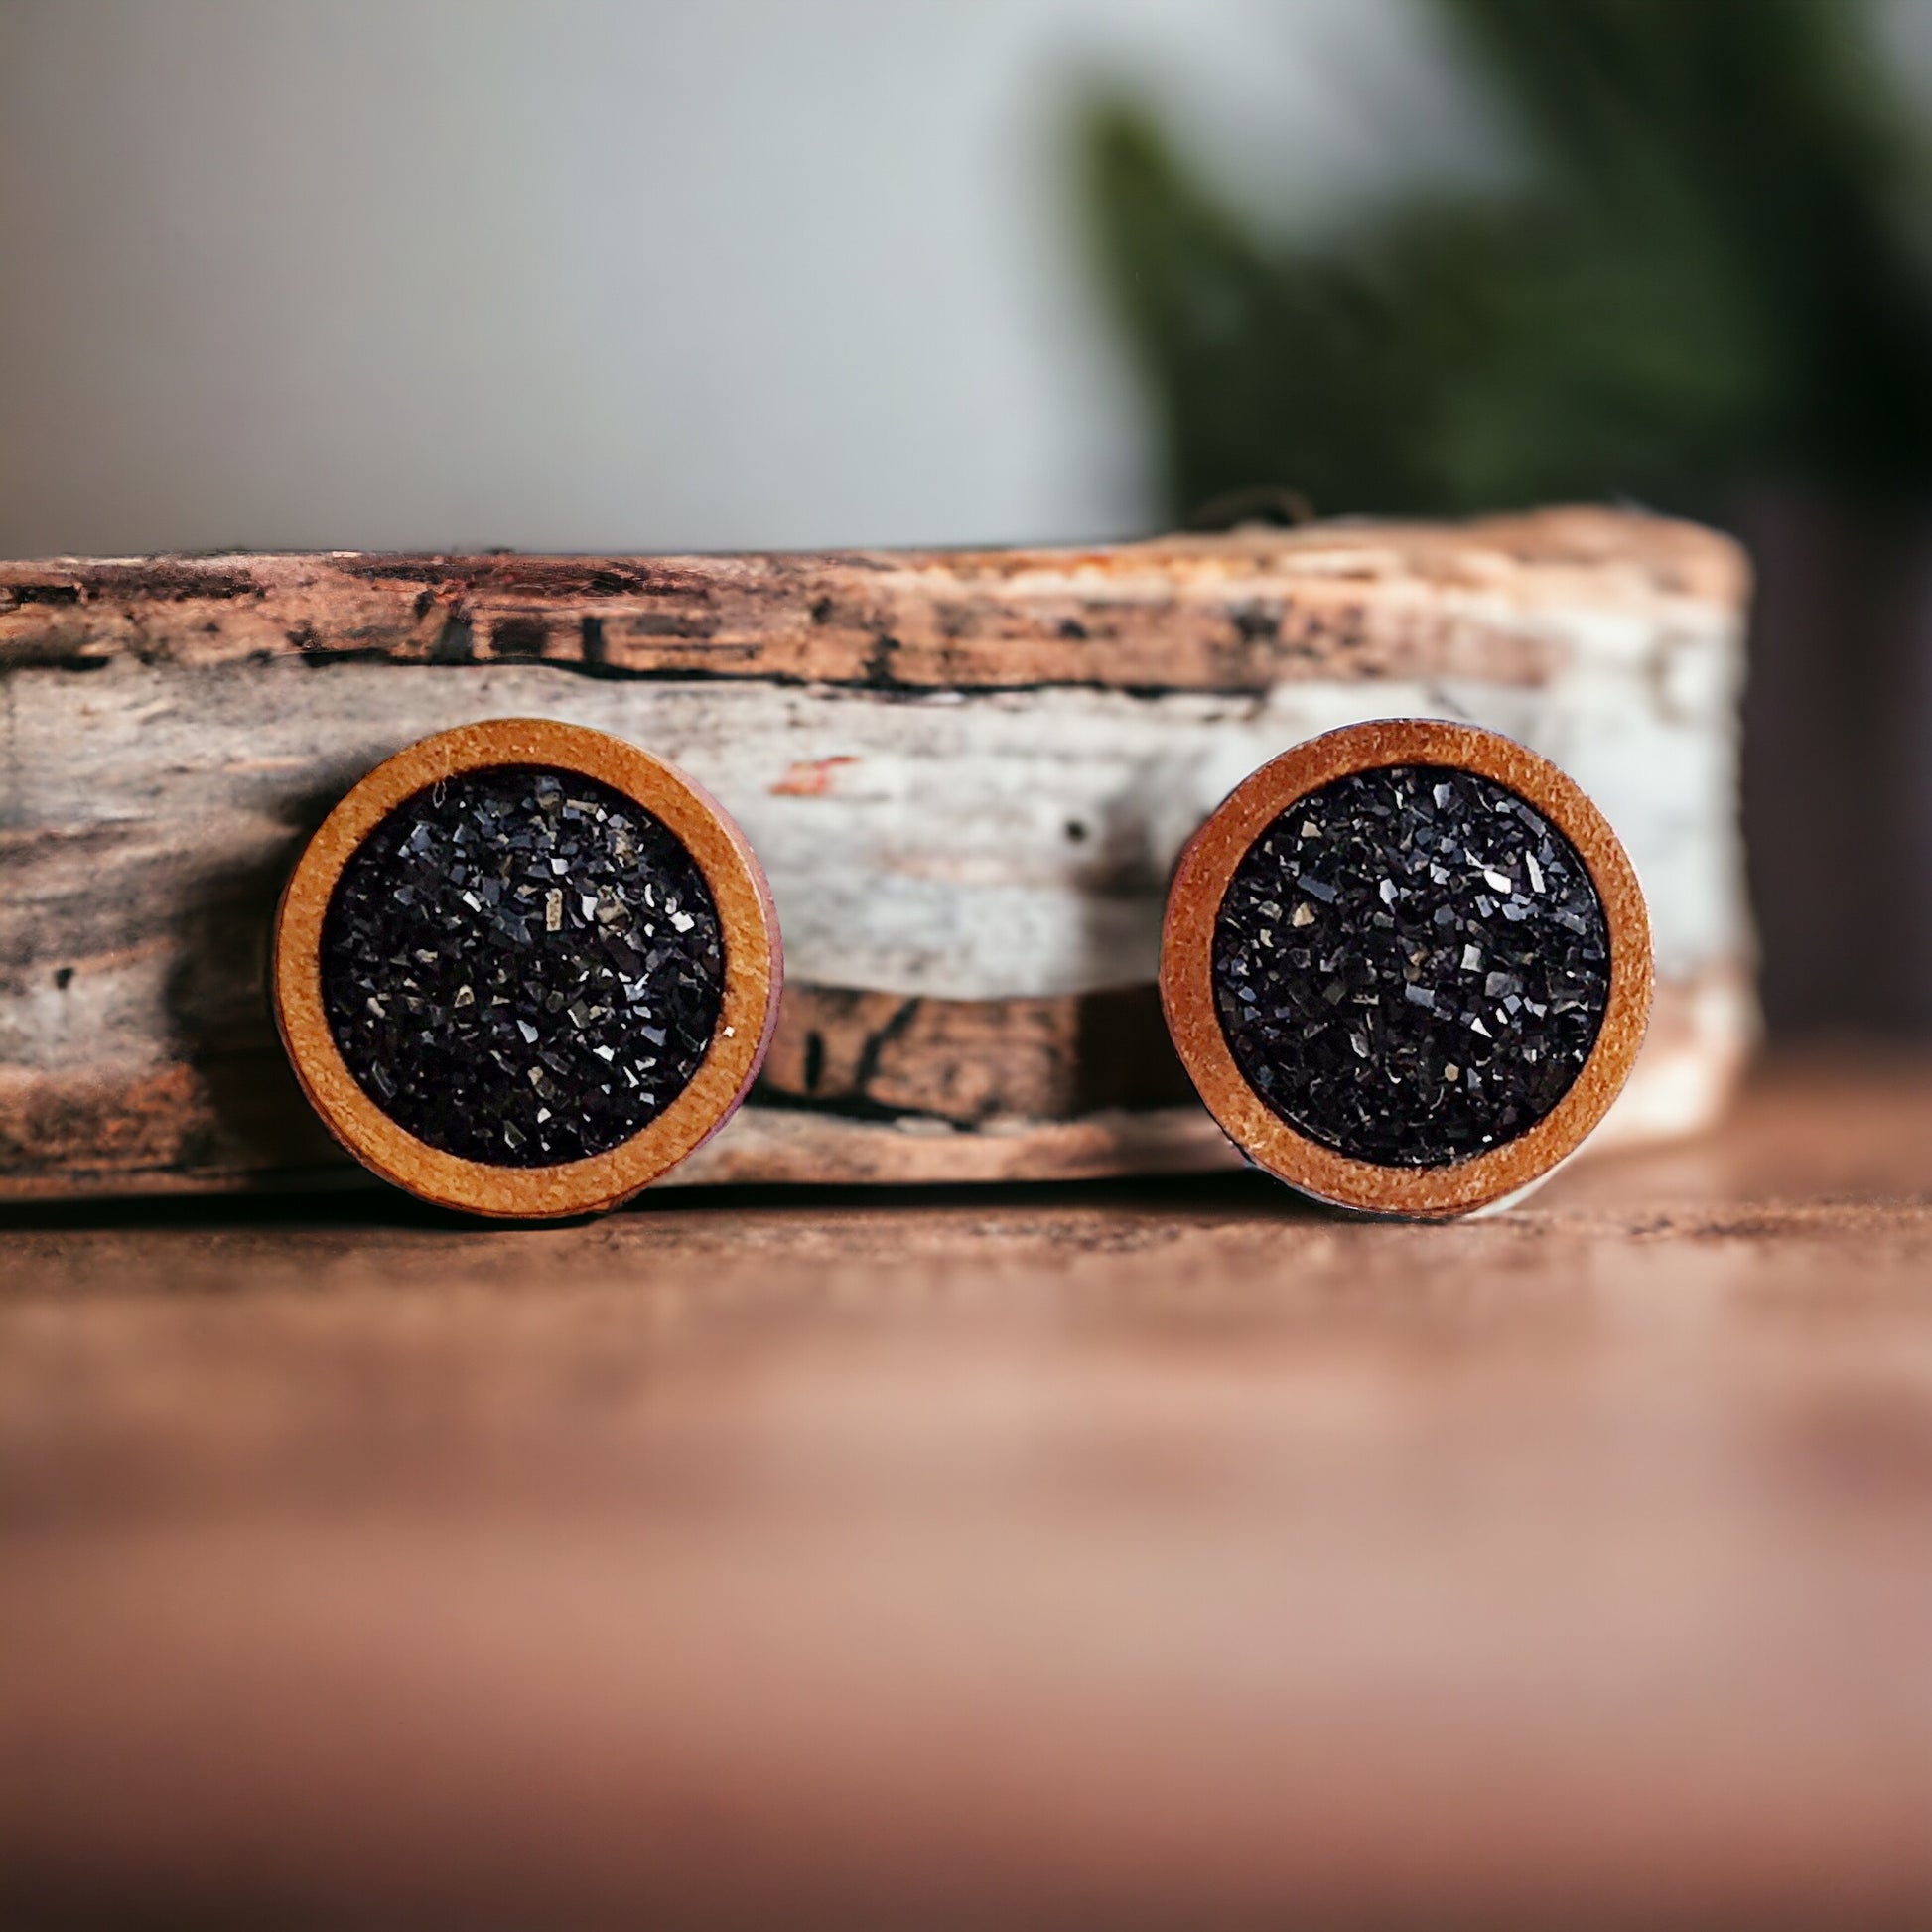 Black Druzy Wood Stud Earrings - Boho Chic Design -Statement Jewelry for Minimalist Style